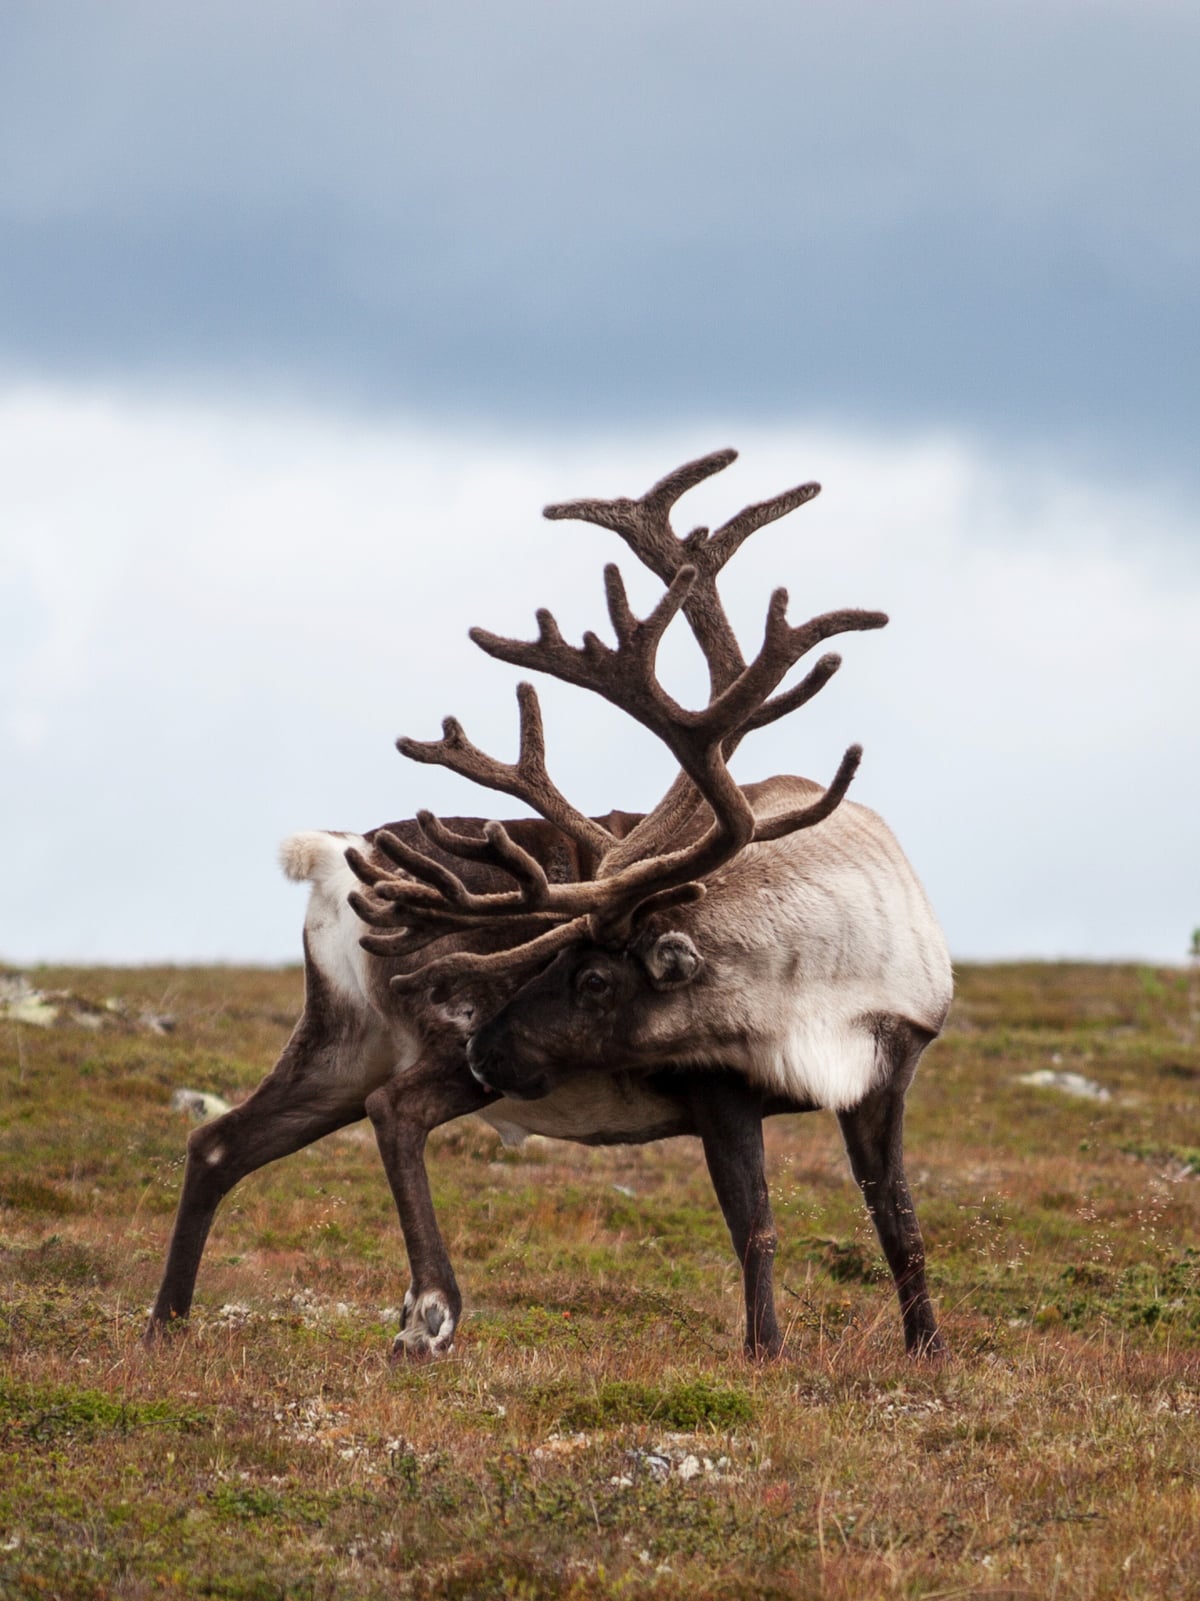 Single reindeer with big antlers against overcast sky. Dalarna, Sweden.